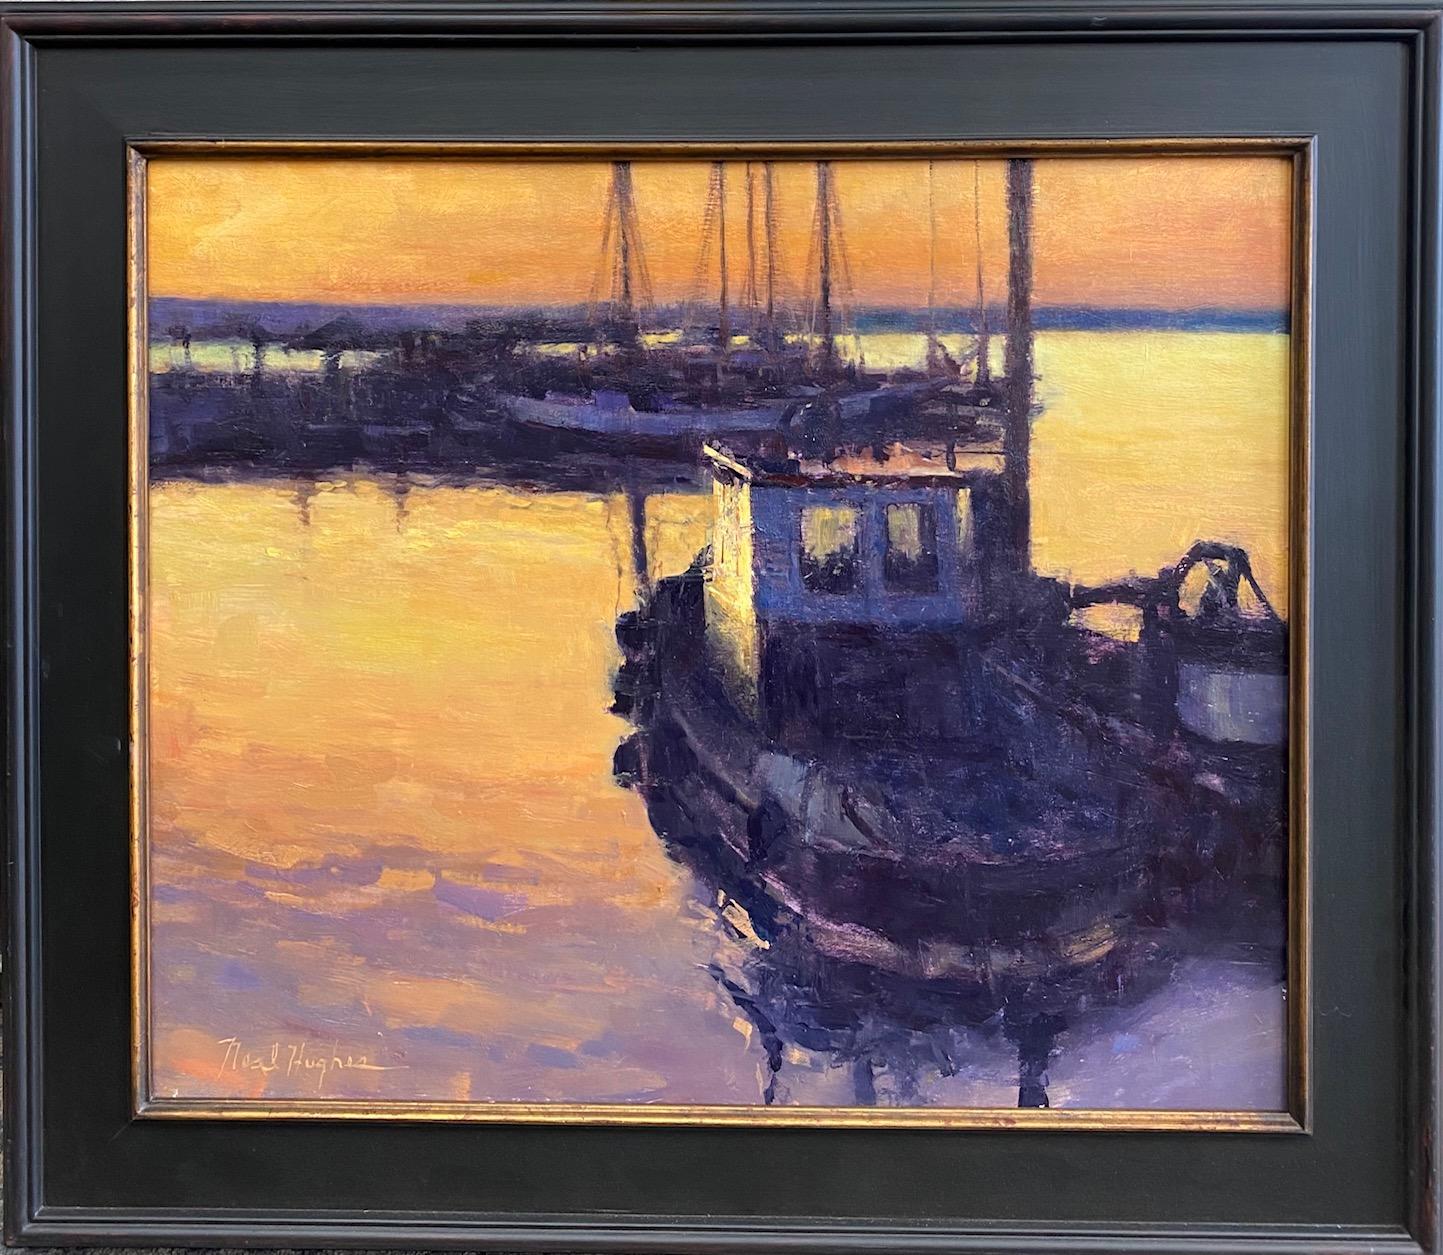 Landscape Painting Neal Hughes - Sunrise Tug, paysage marin nocturne réaliste original et impressionniste